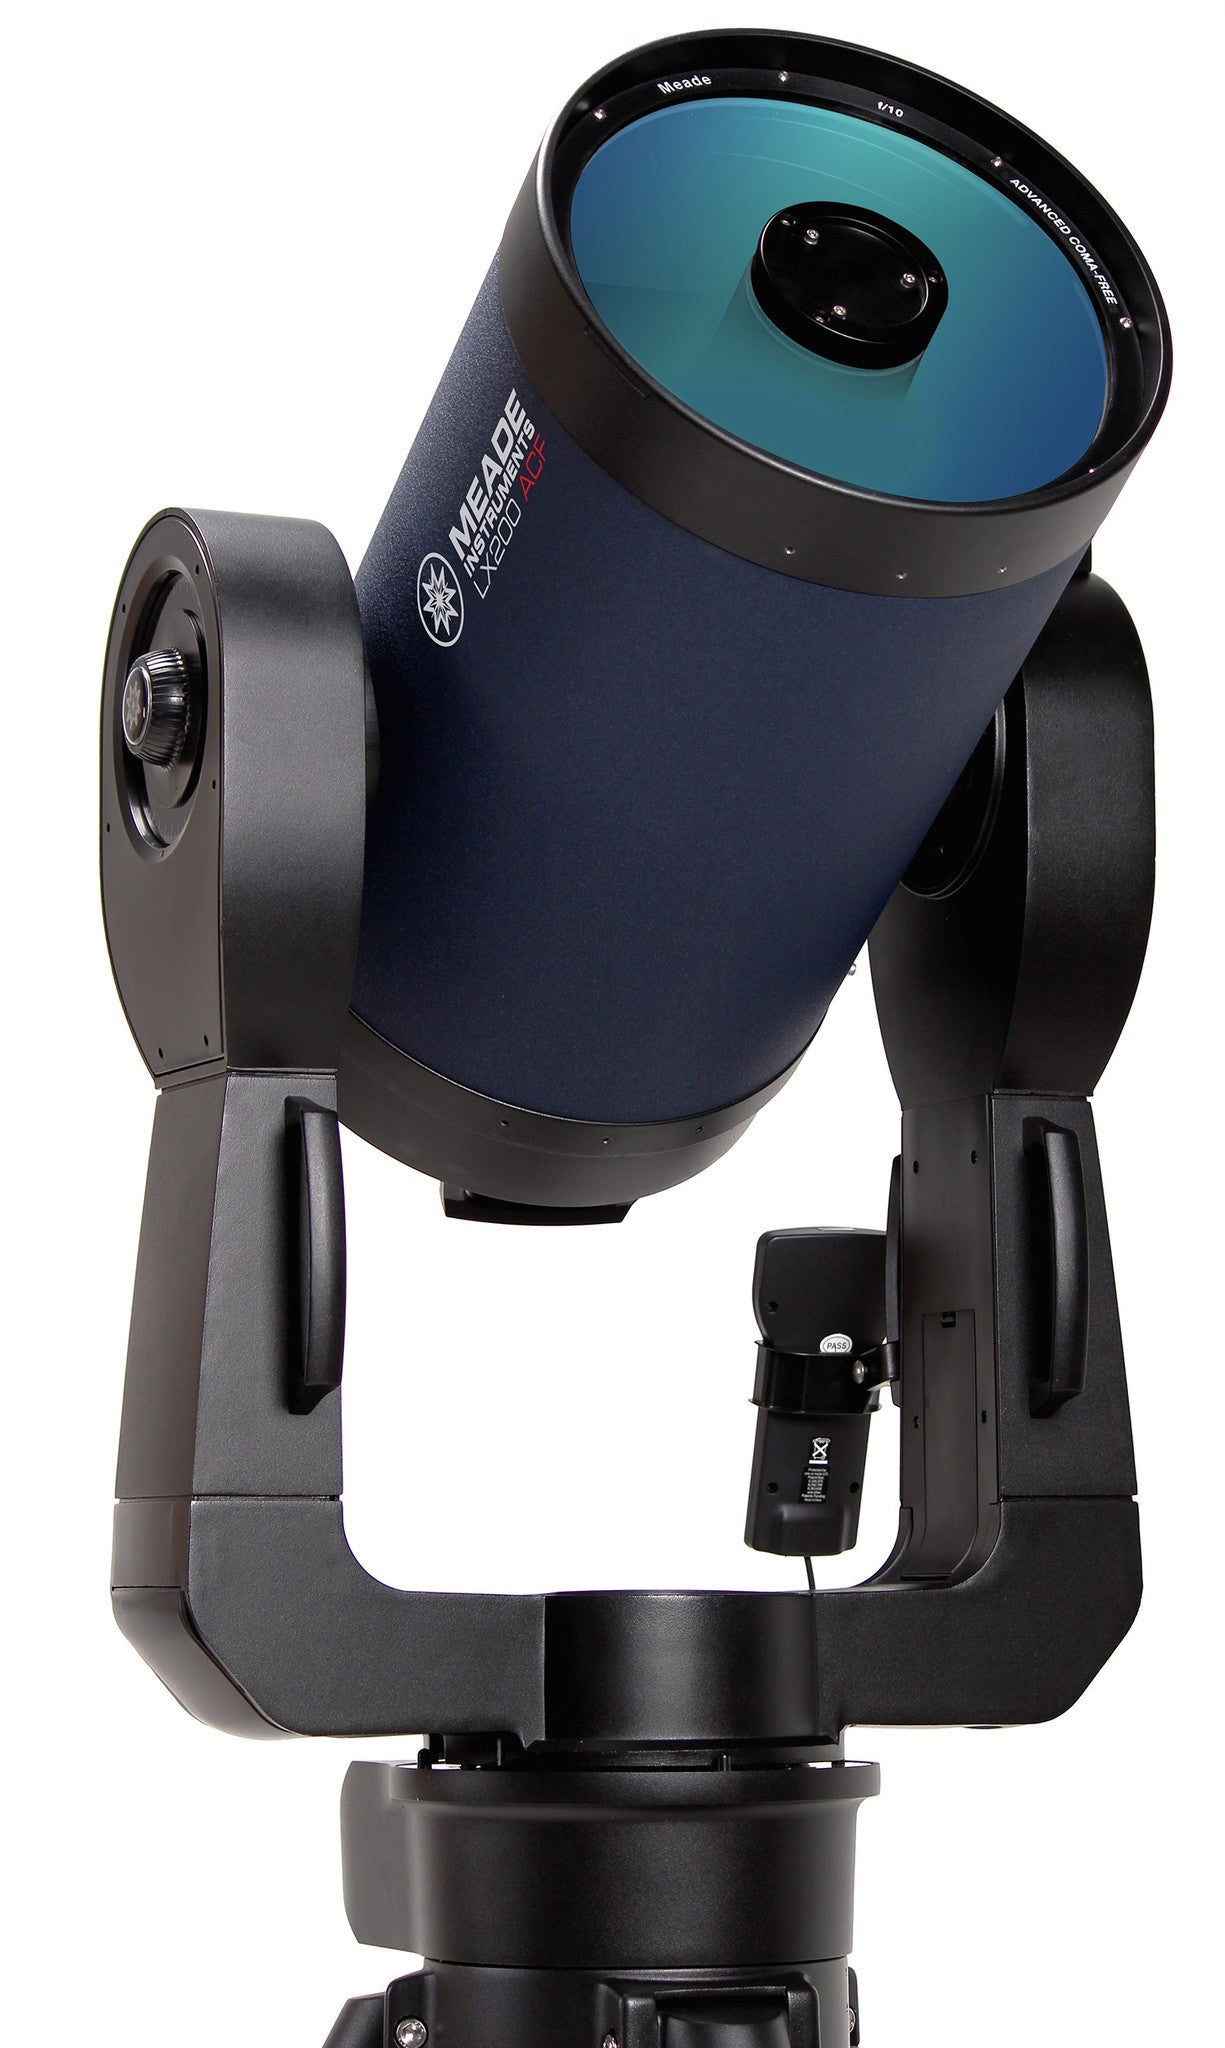 Meade 10" f/10 LX200-ACF w/UHTC (1010-60-03) - Telescopes - Meade - Helix Camera 